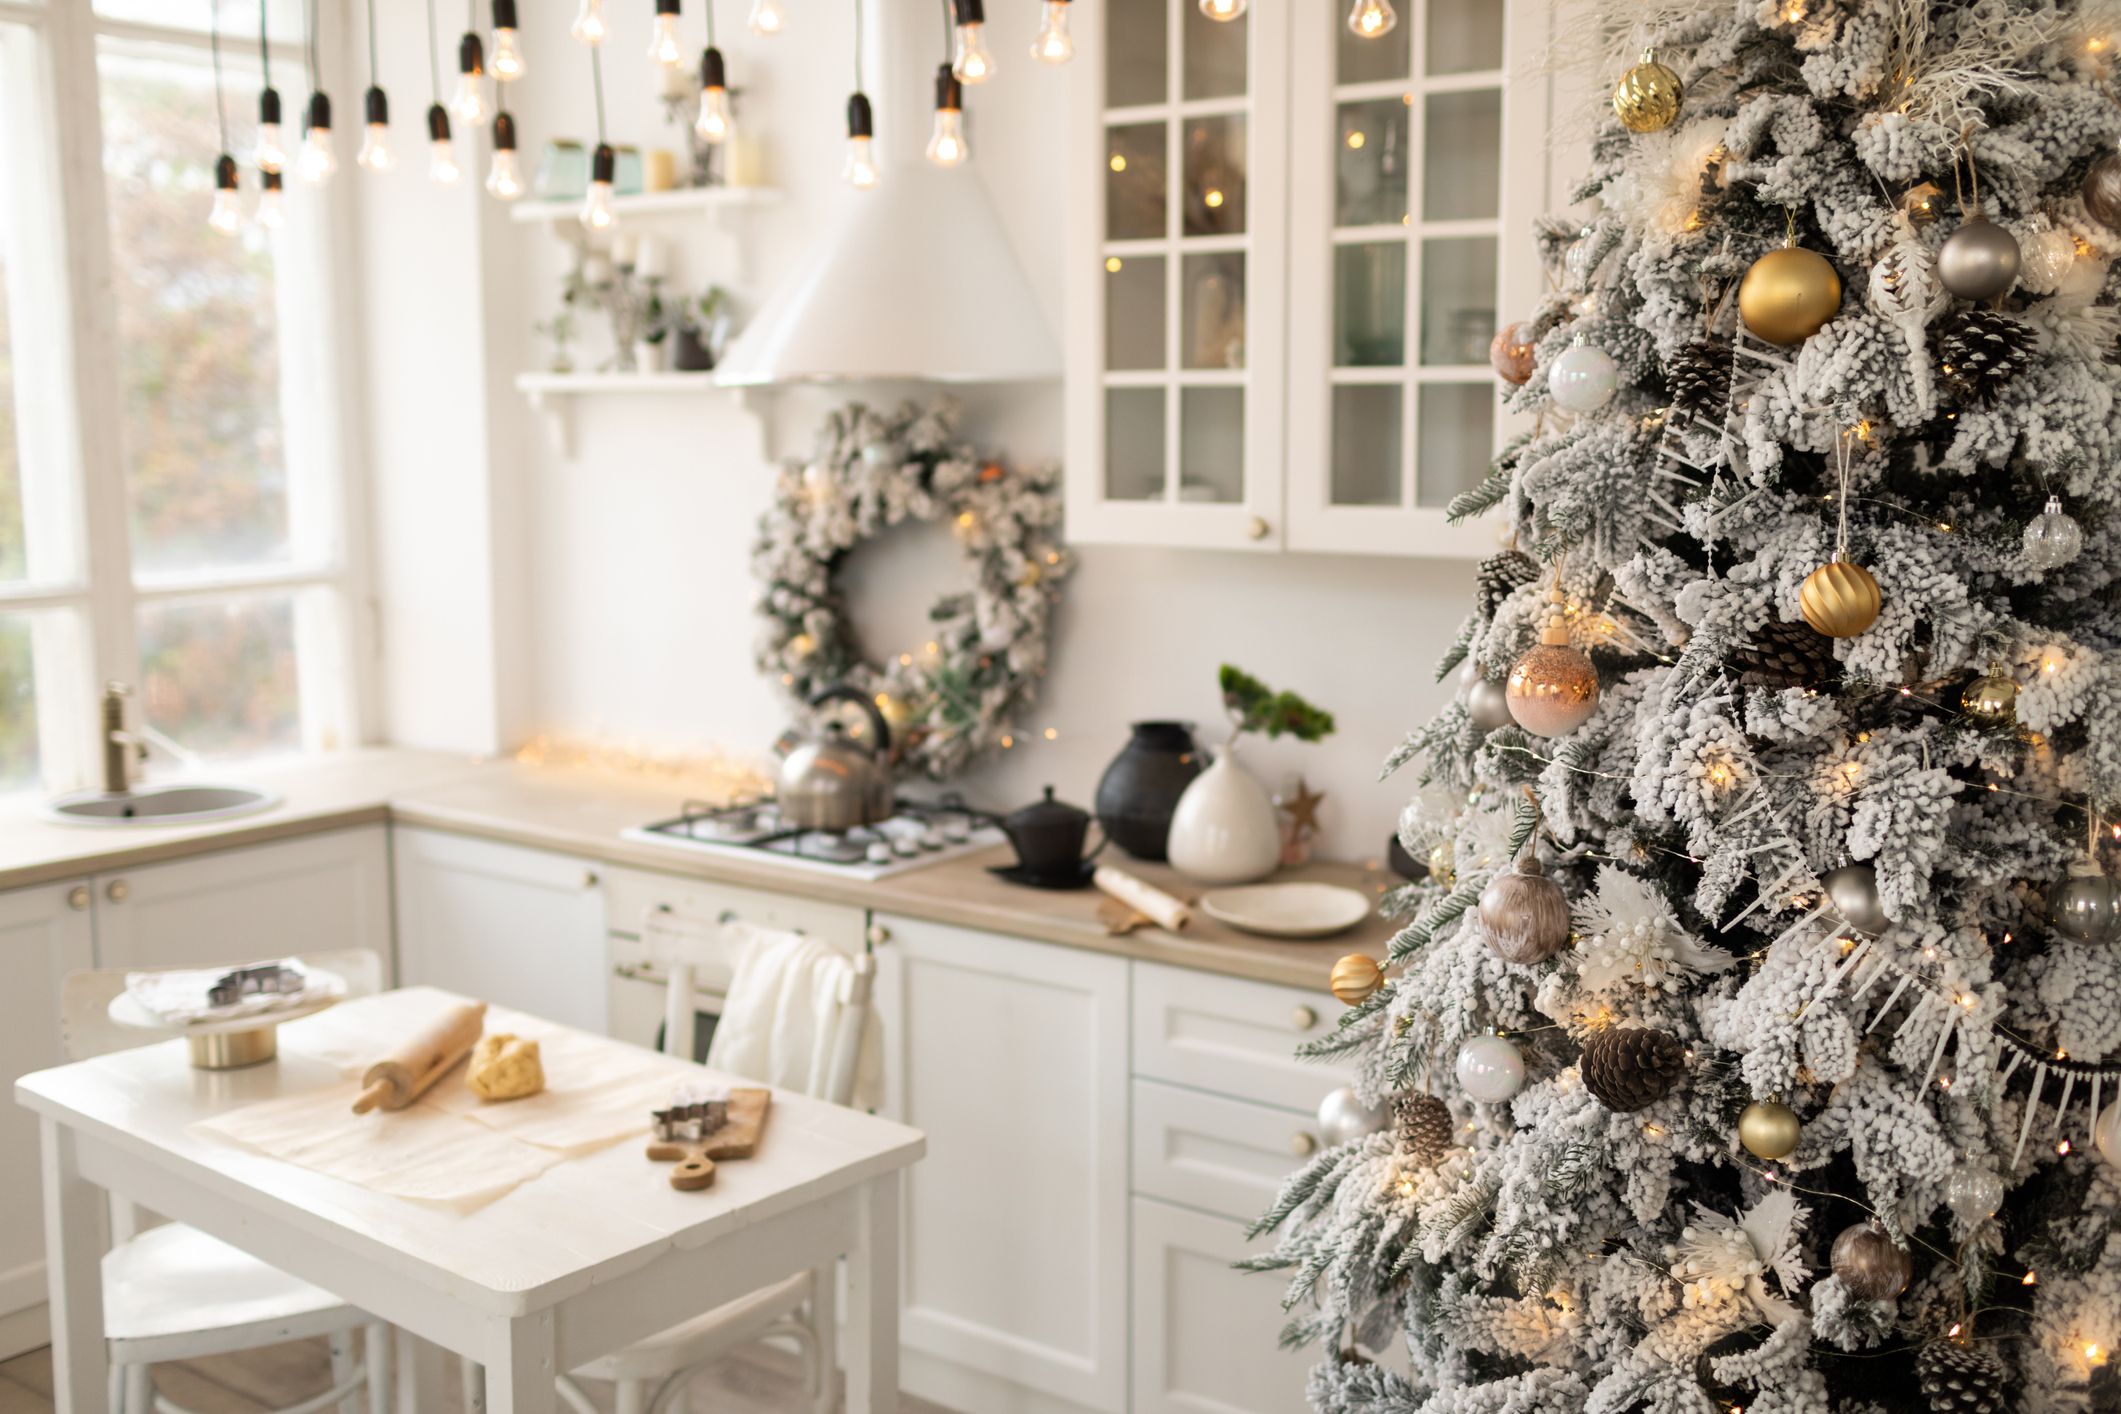 20+ Christmas Kitchen Decor Ideas - How to Decorate Your Kitchen ...